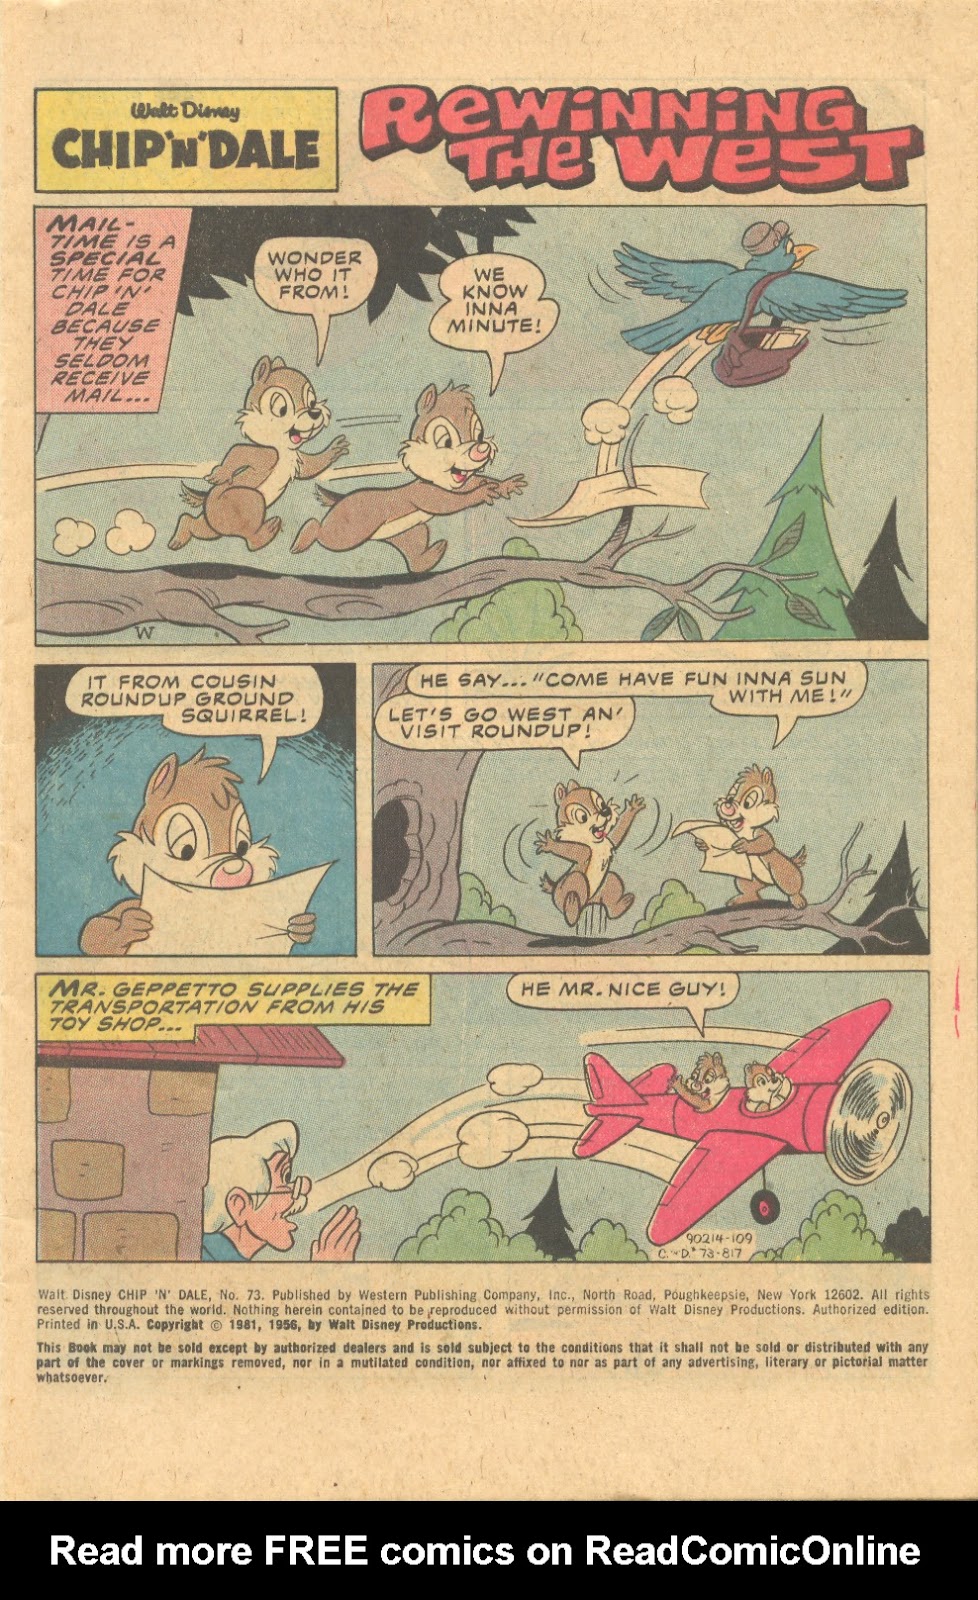 Walt Disney Chip 'n' Dale issue 73 - Page 3